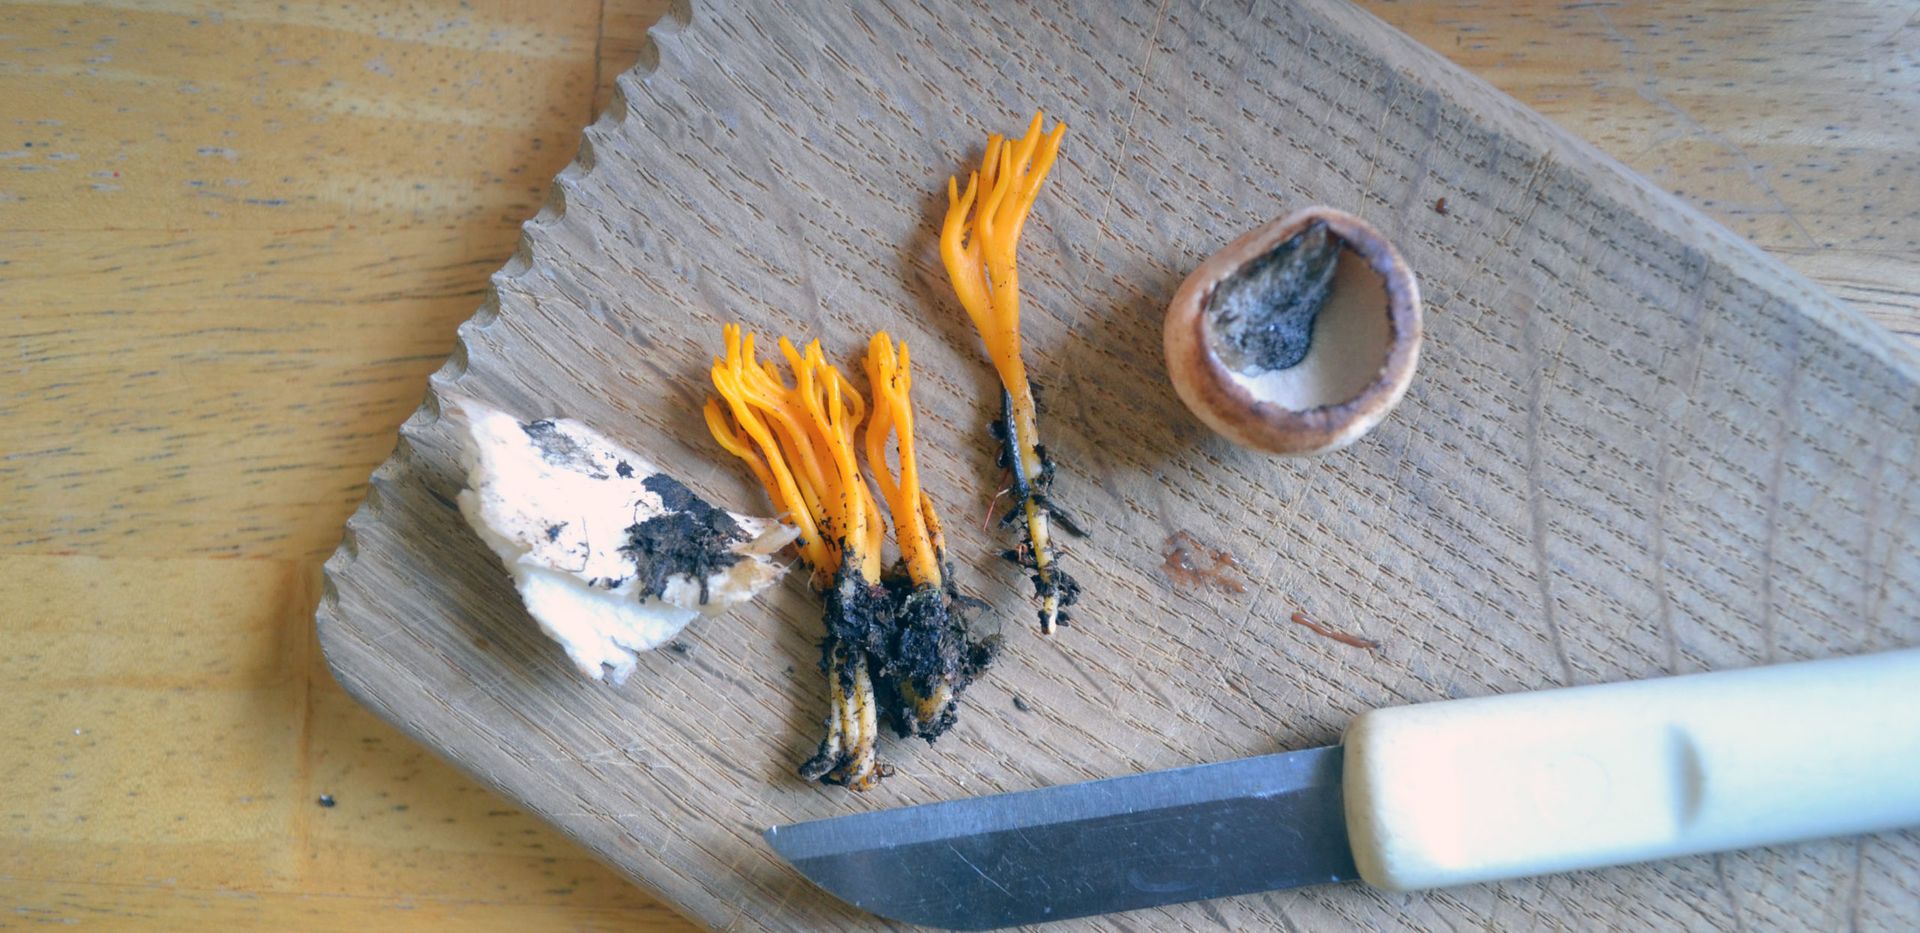 Orange coral mushrooms (Source: Sania)